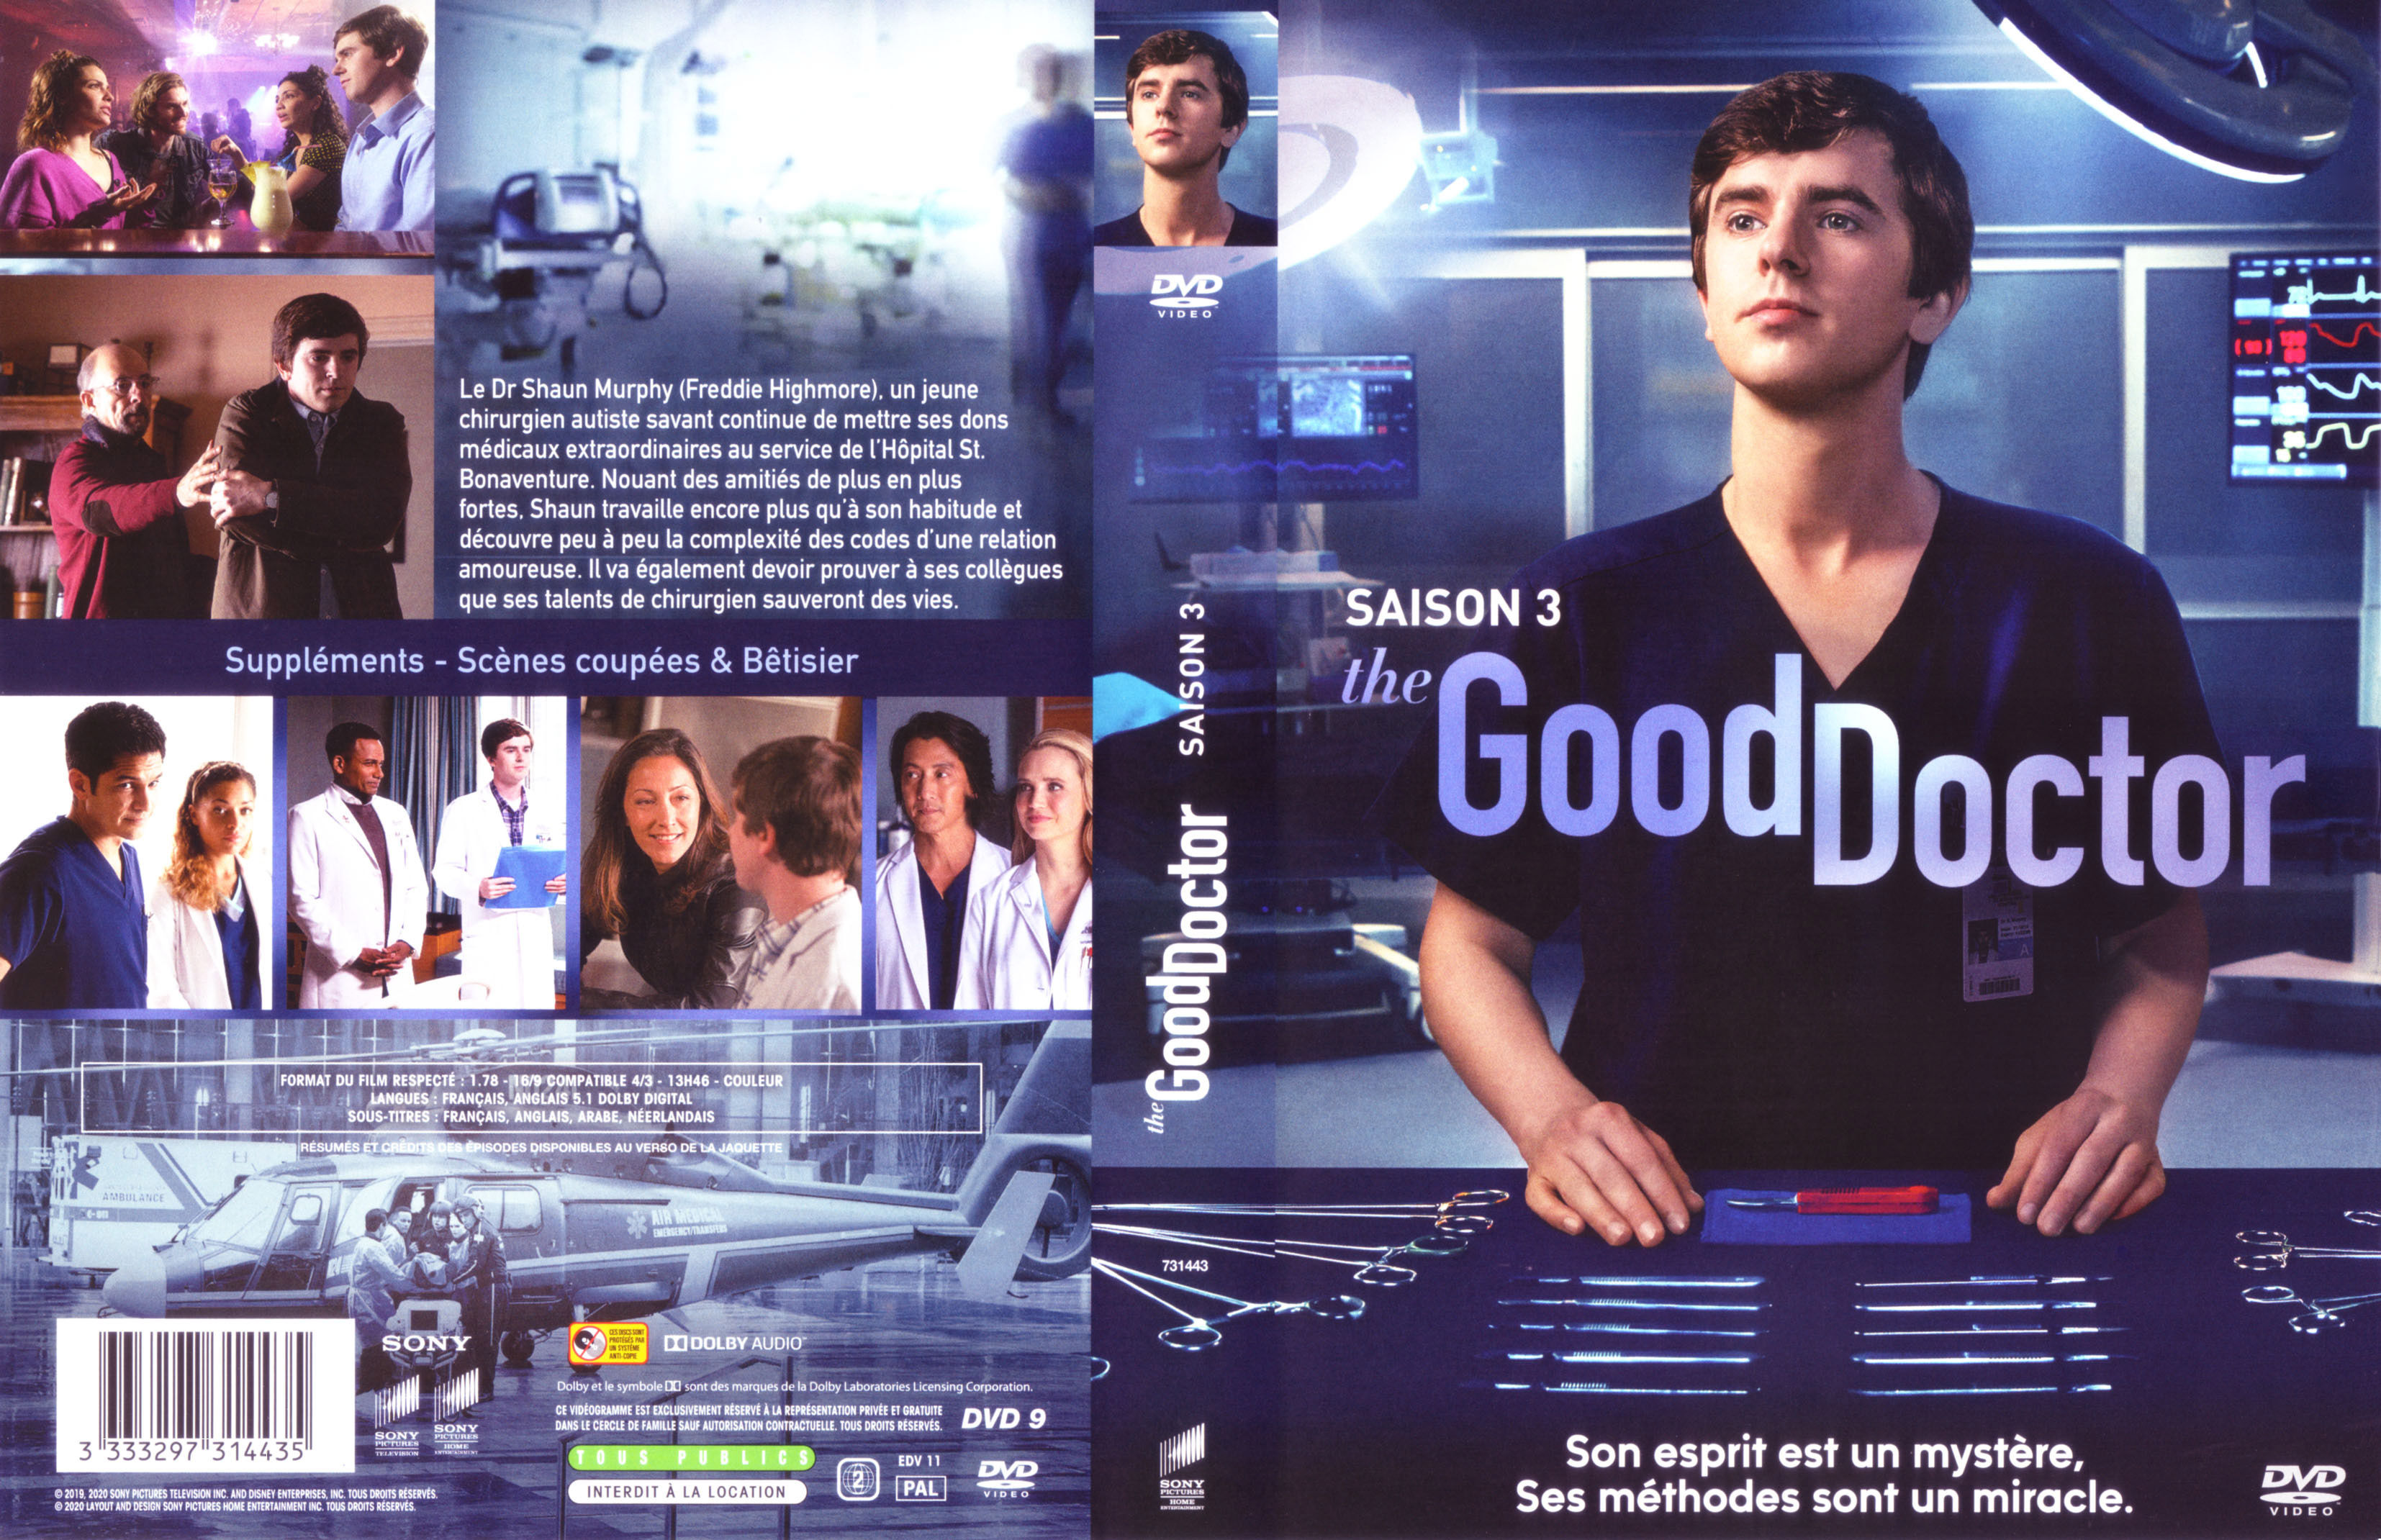 Jaquette DVD The good doctor Saison 3